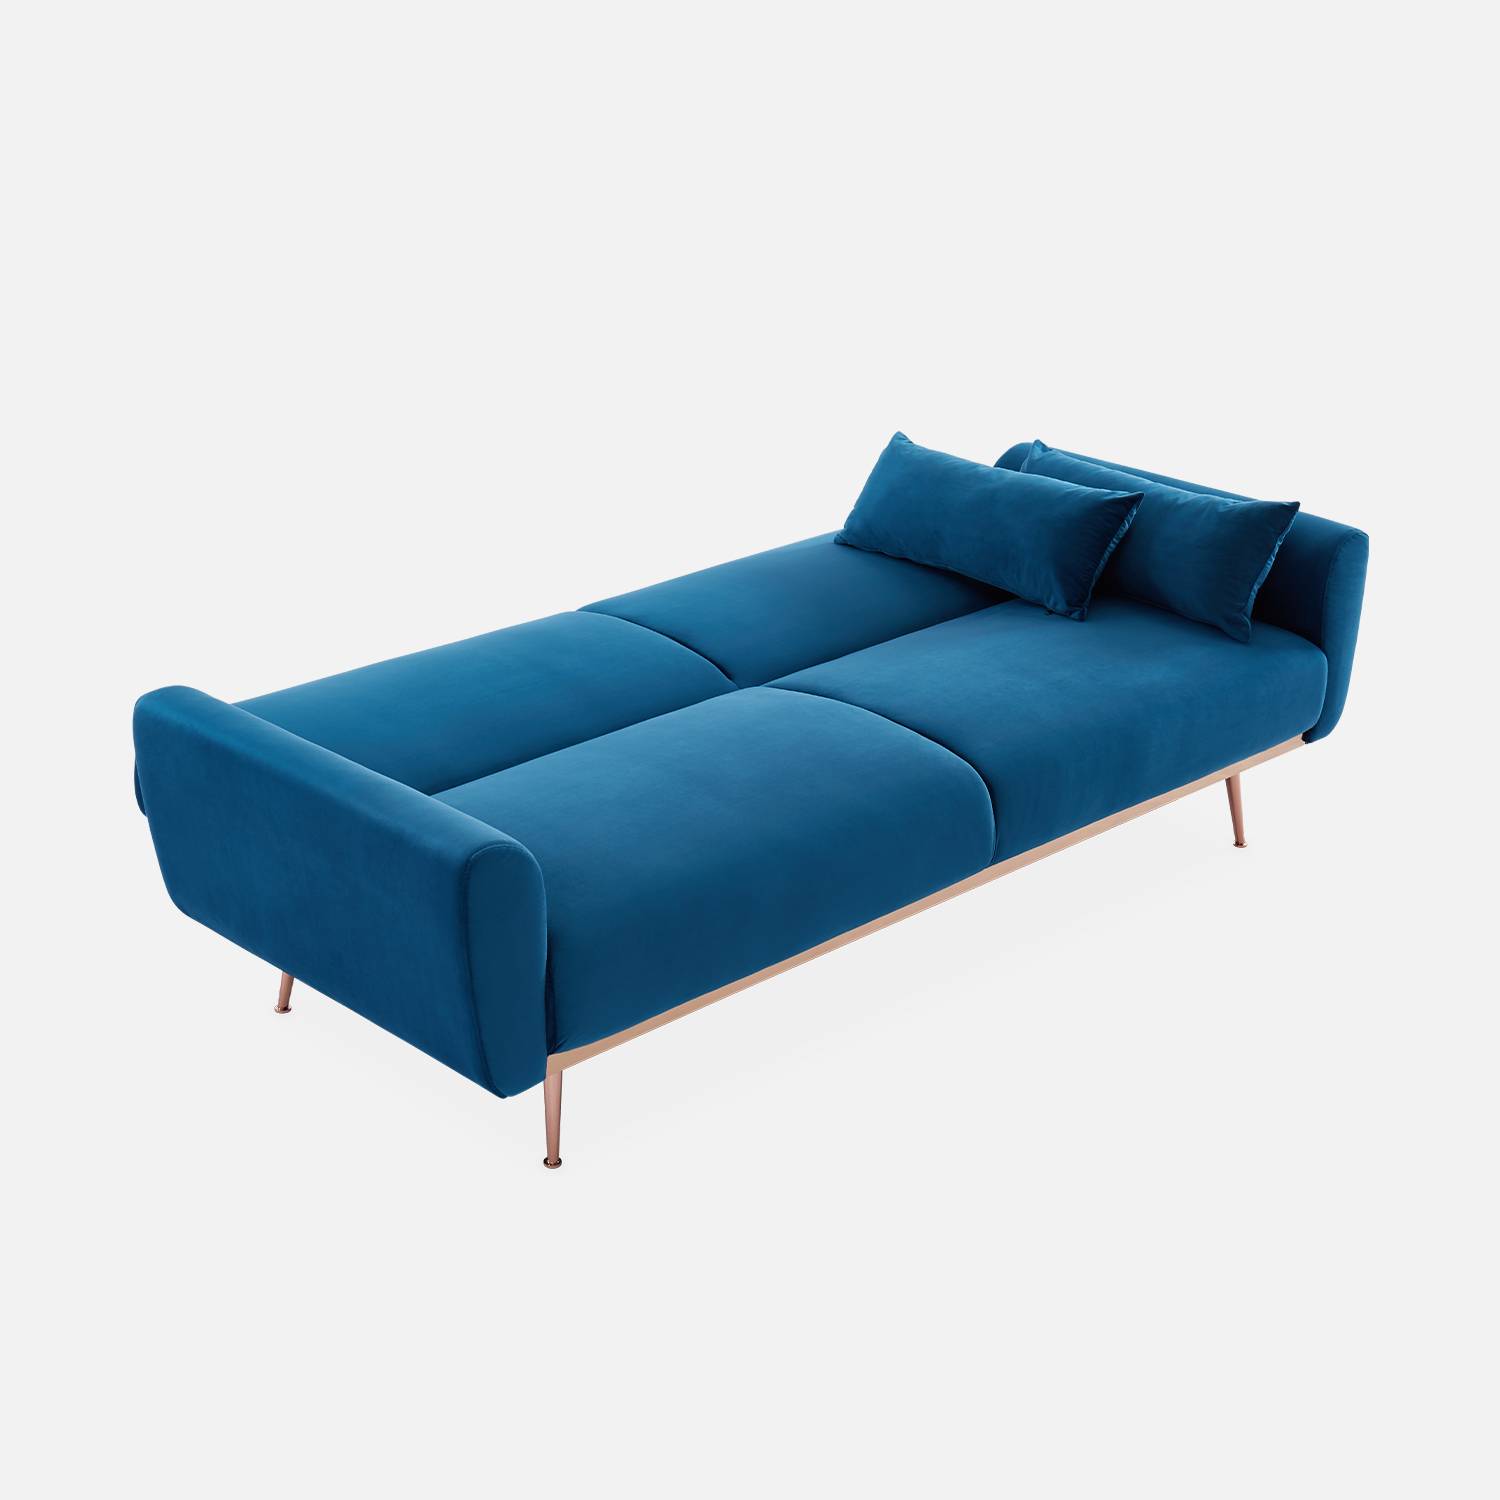 Design Sofa ausziehbar aus Samt - Oskar - 2 - 3 Sitzer skandinavischischer Stil mit dünnen roségoldenen Beinen Photo6